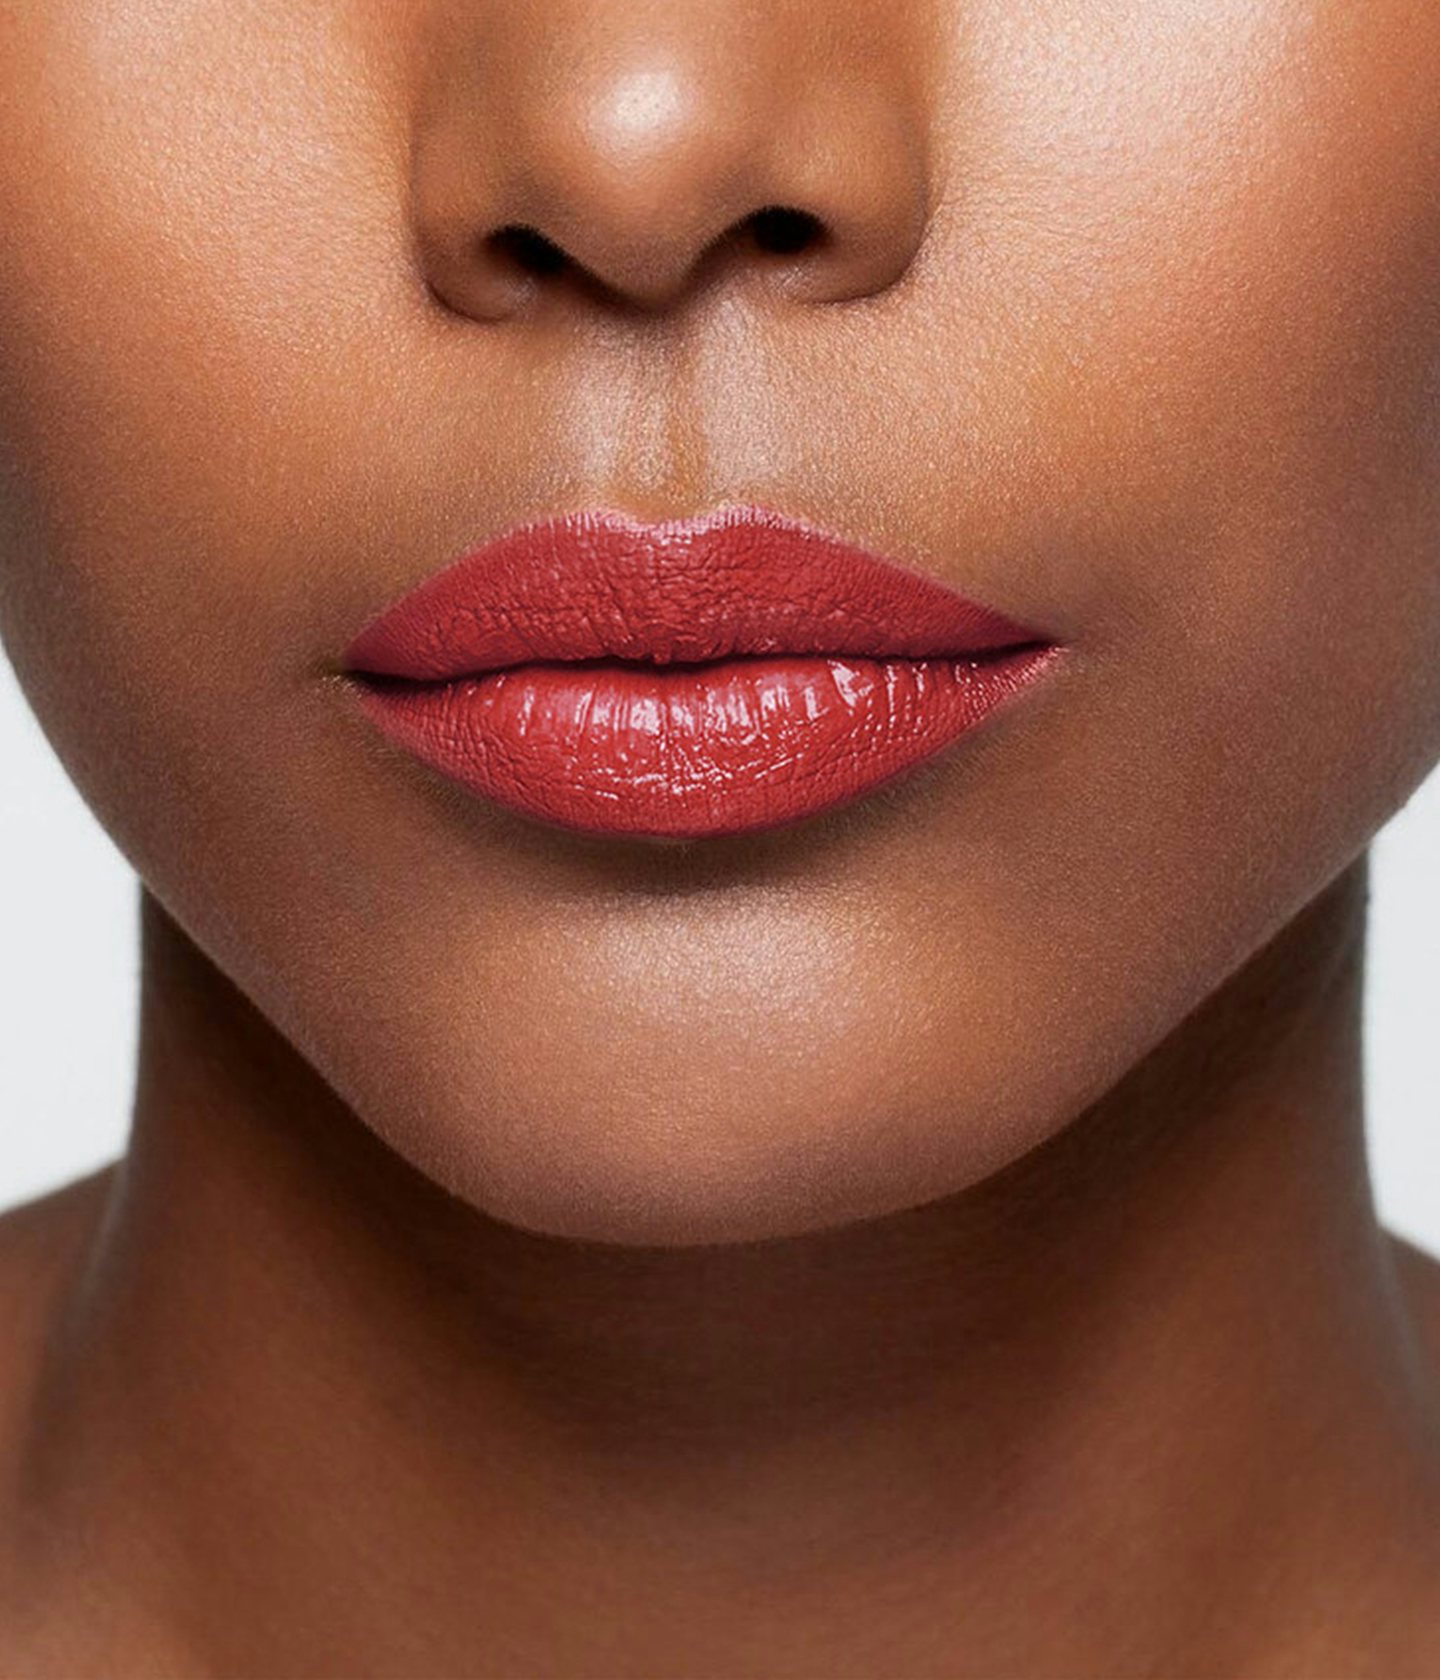 La bouche rouge SW1X lipstick shade on the lips of a dark skin model